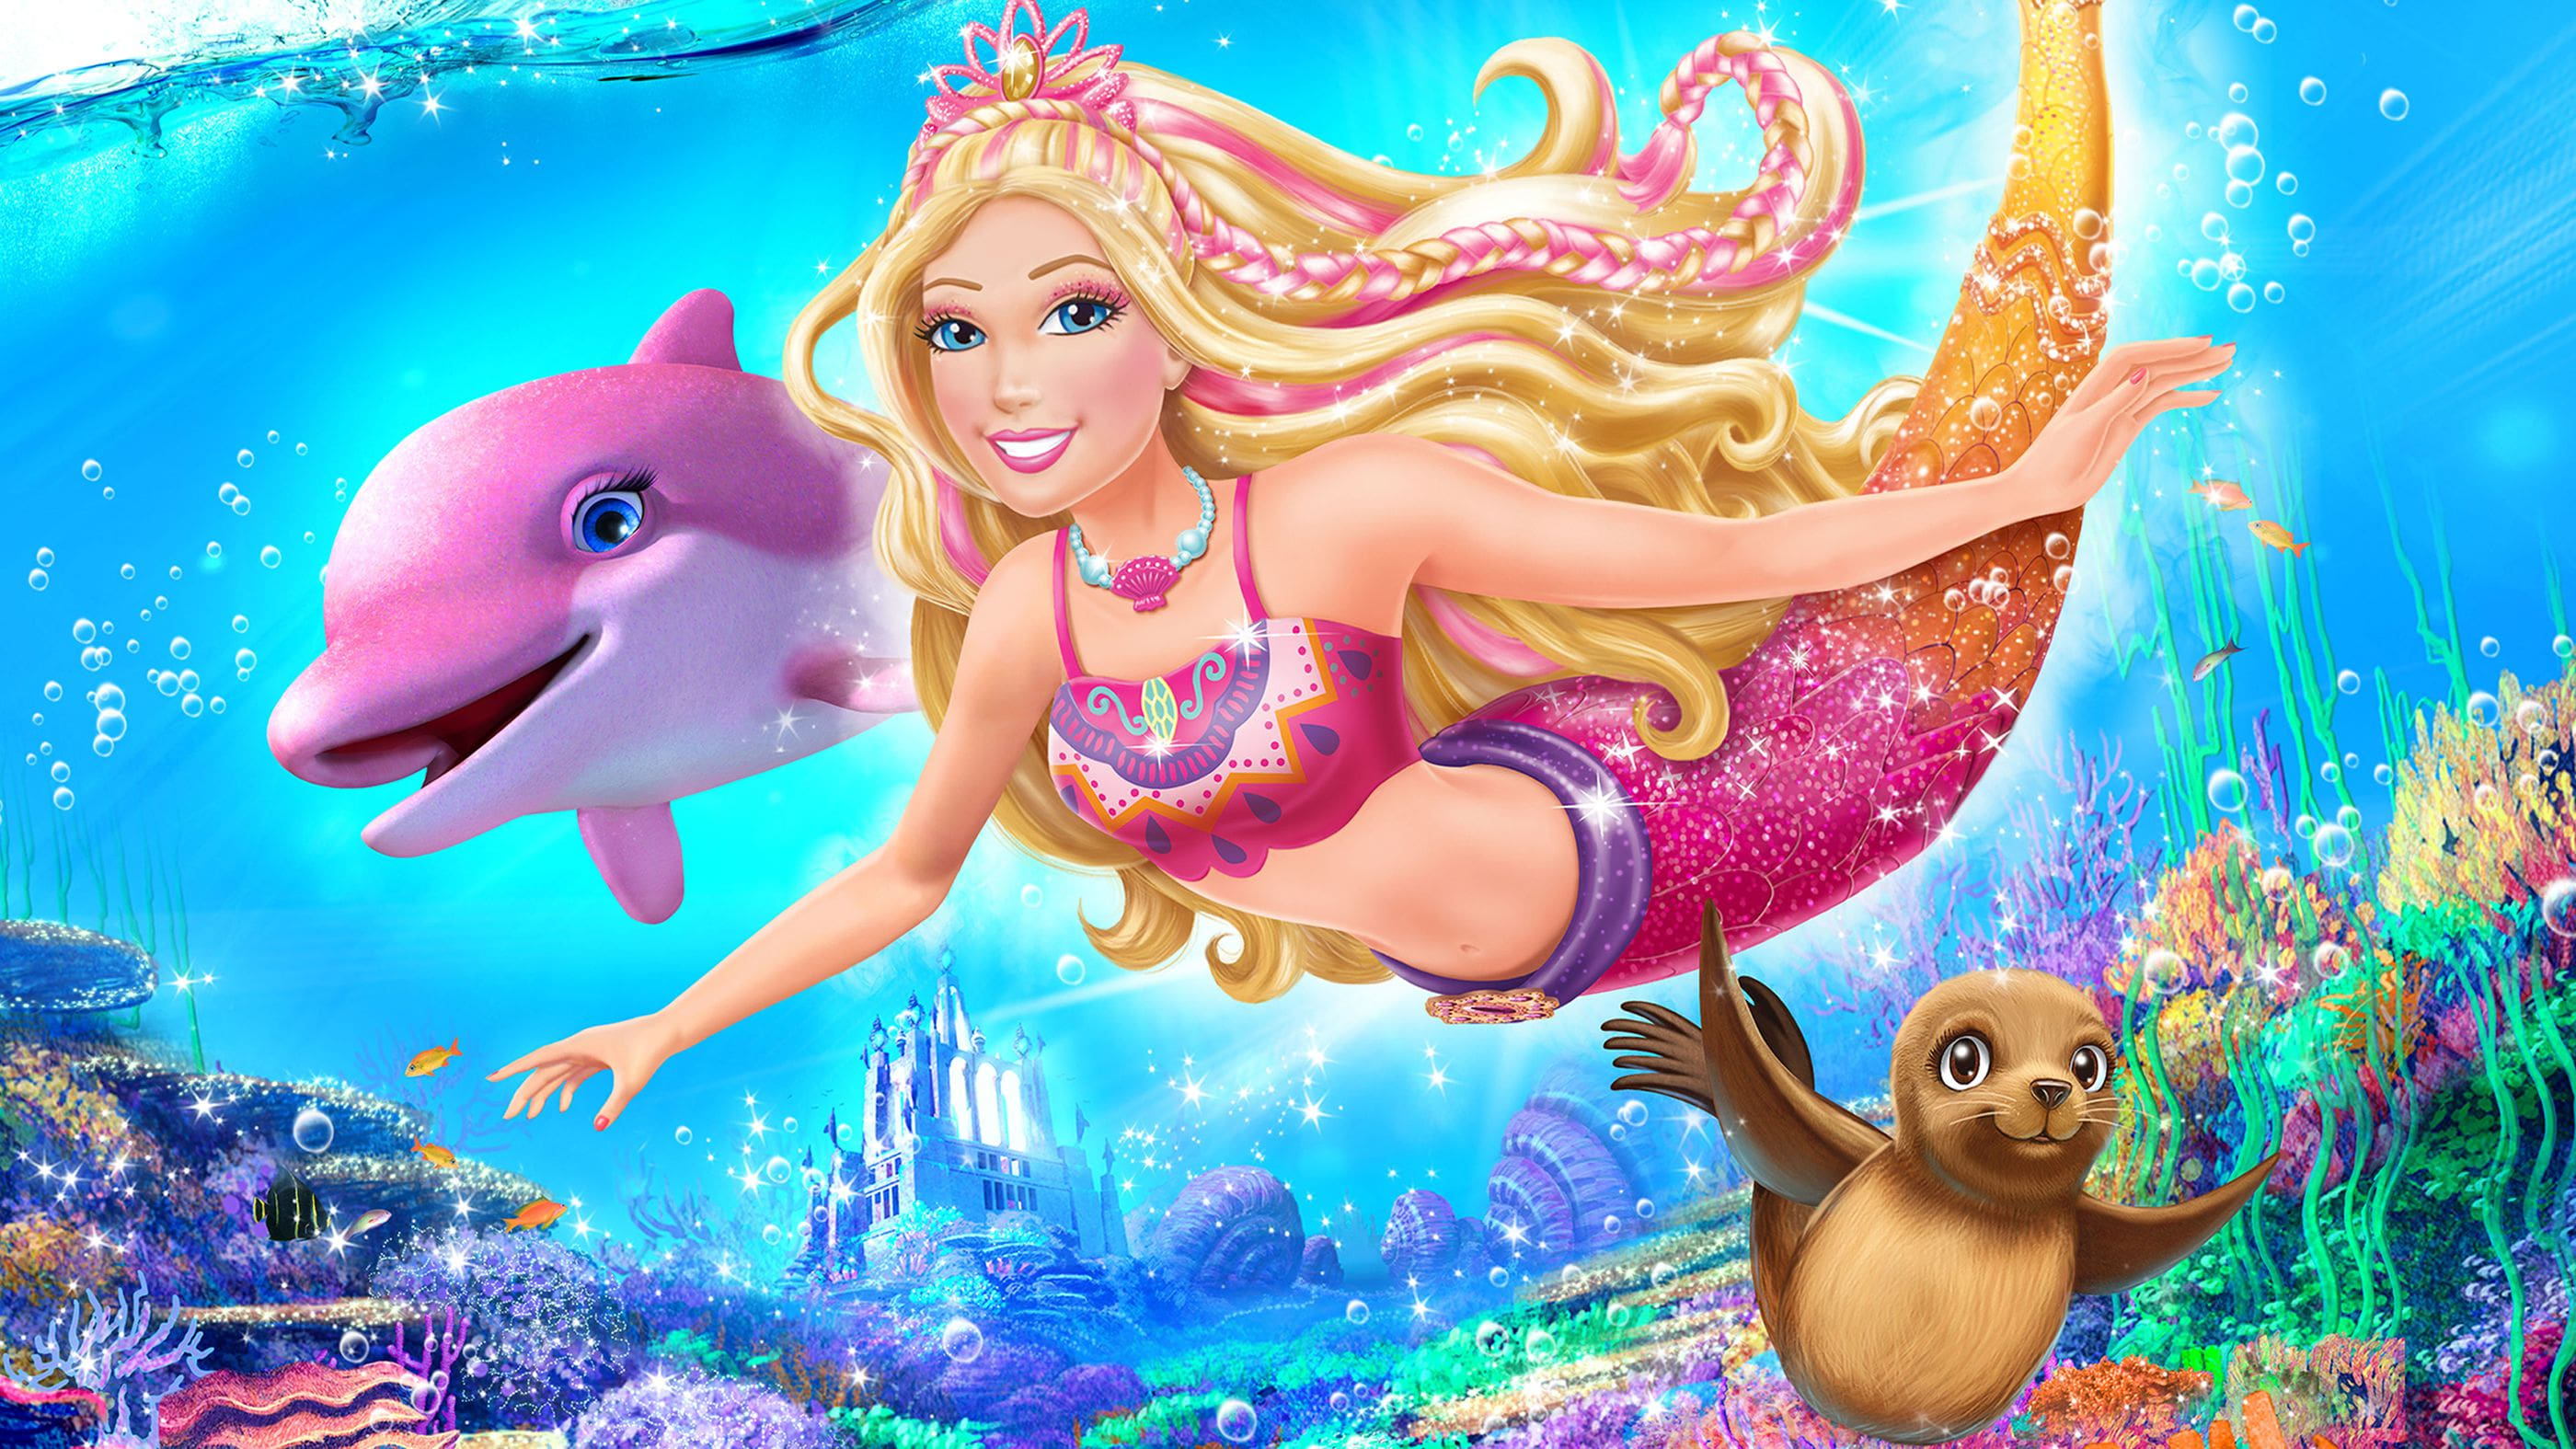 Poster Phim Barbie Câu Chuyện Người Cá 2 (Barbie In A Mermaid Tale 2)